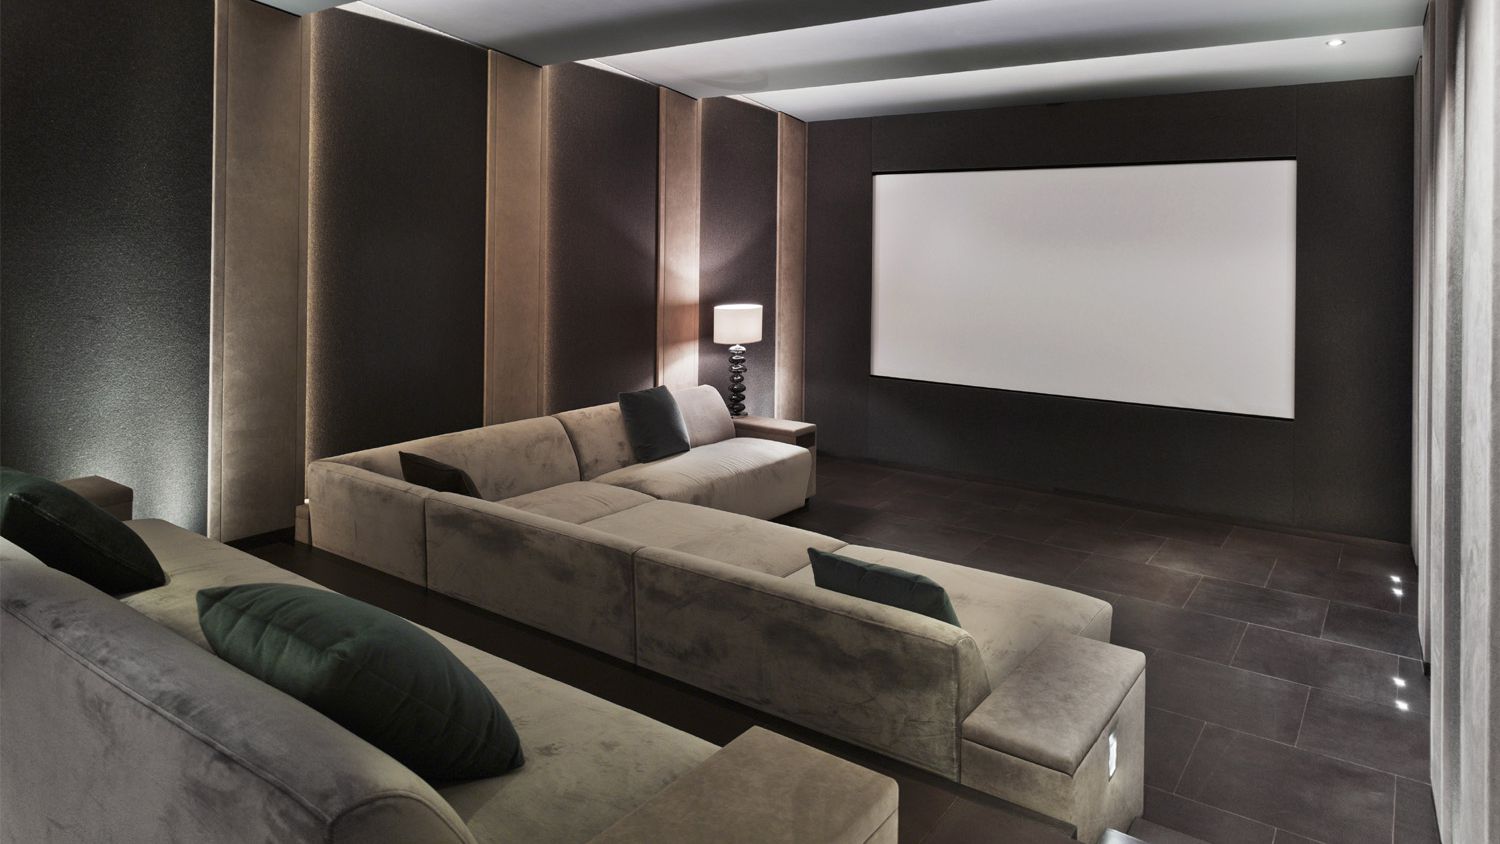 Cinema Rooms modern home entertainment